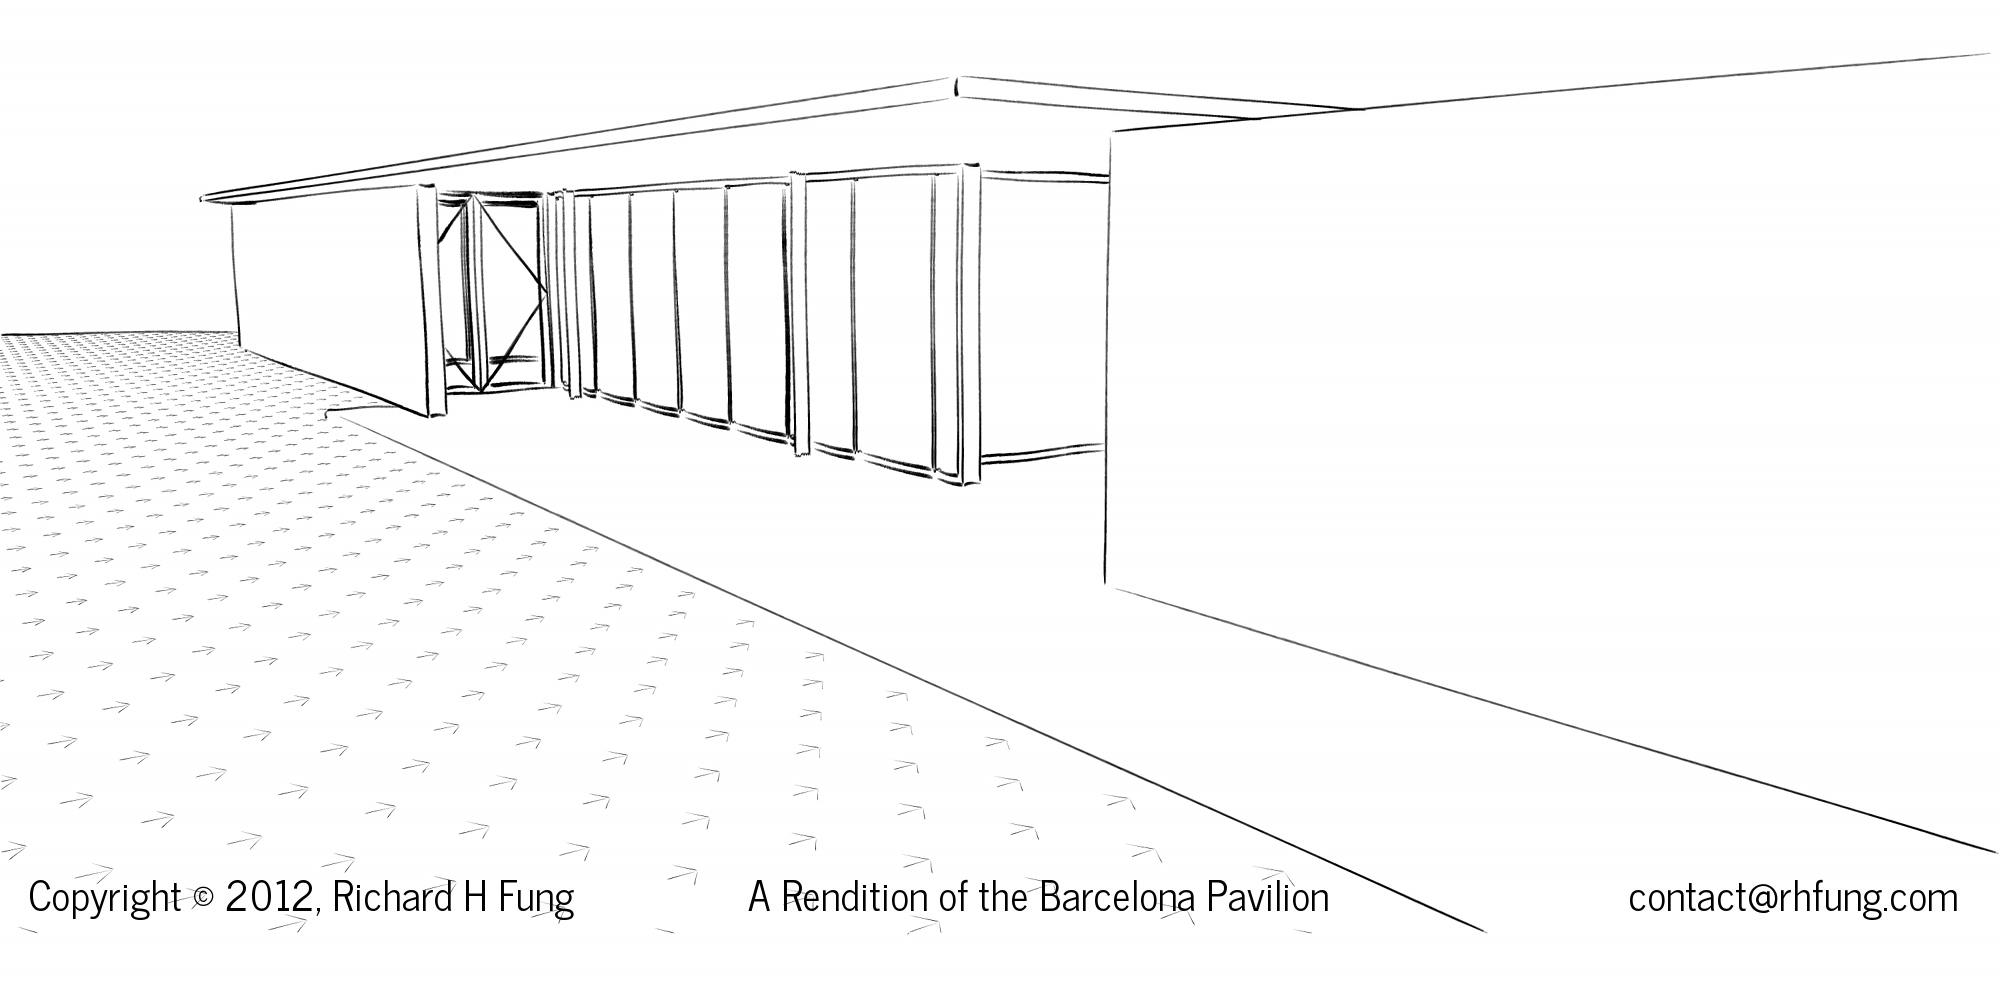 Barcelona Pavilion Behind the Building